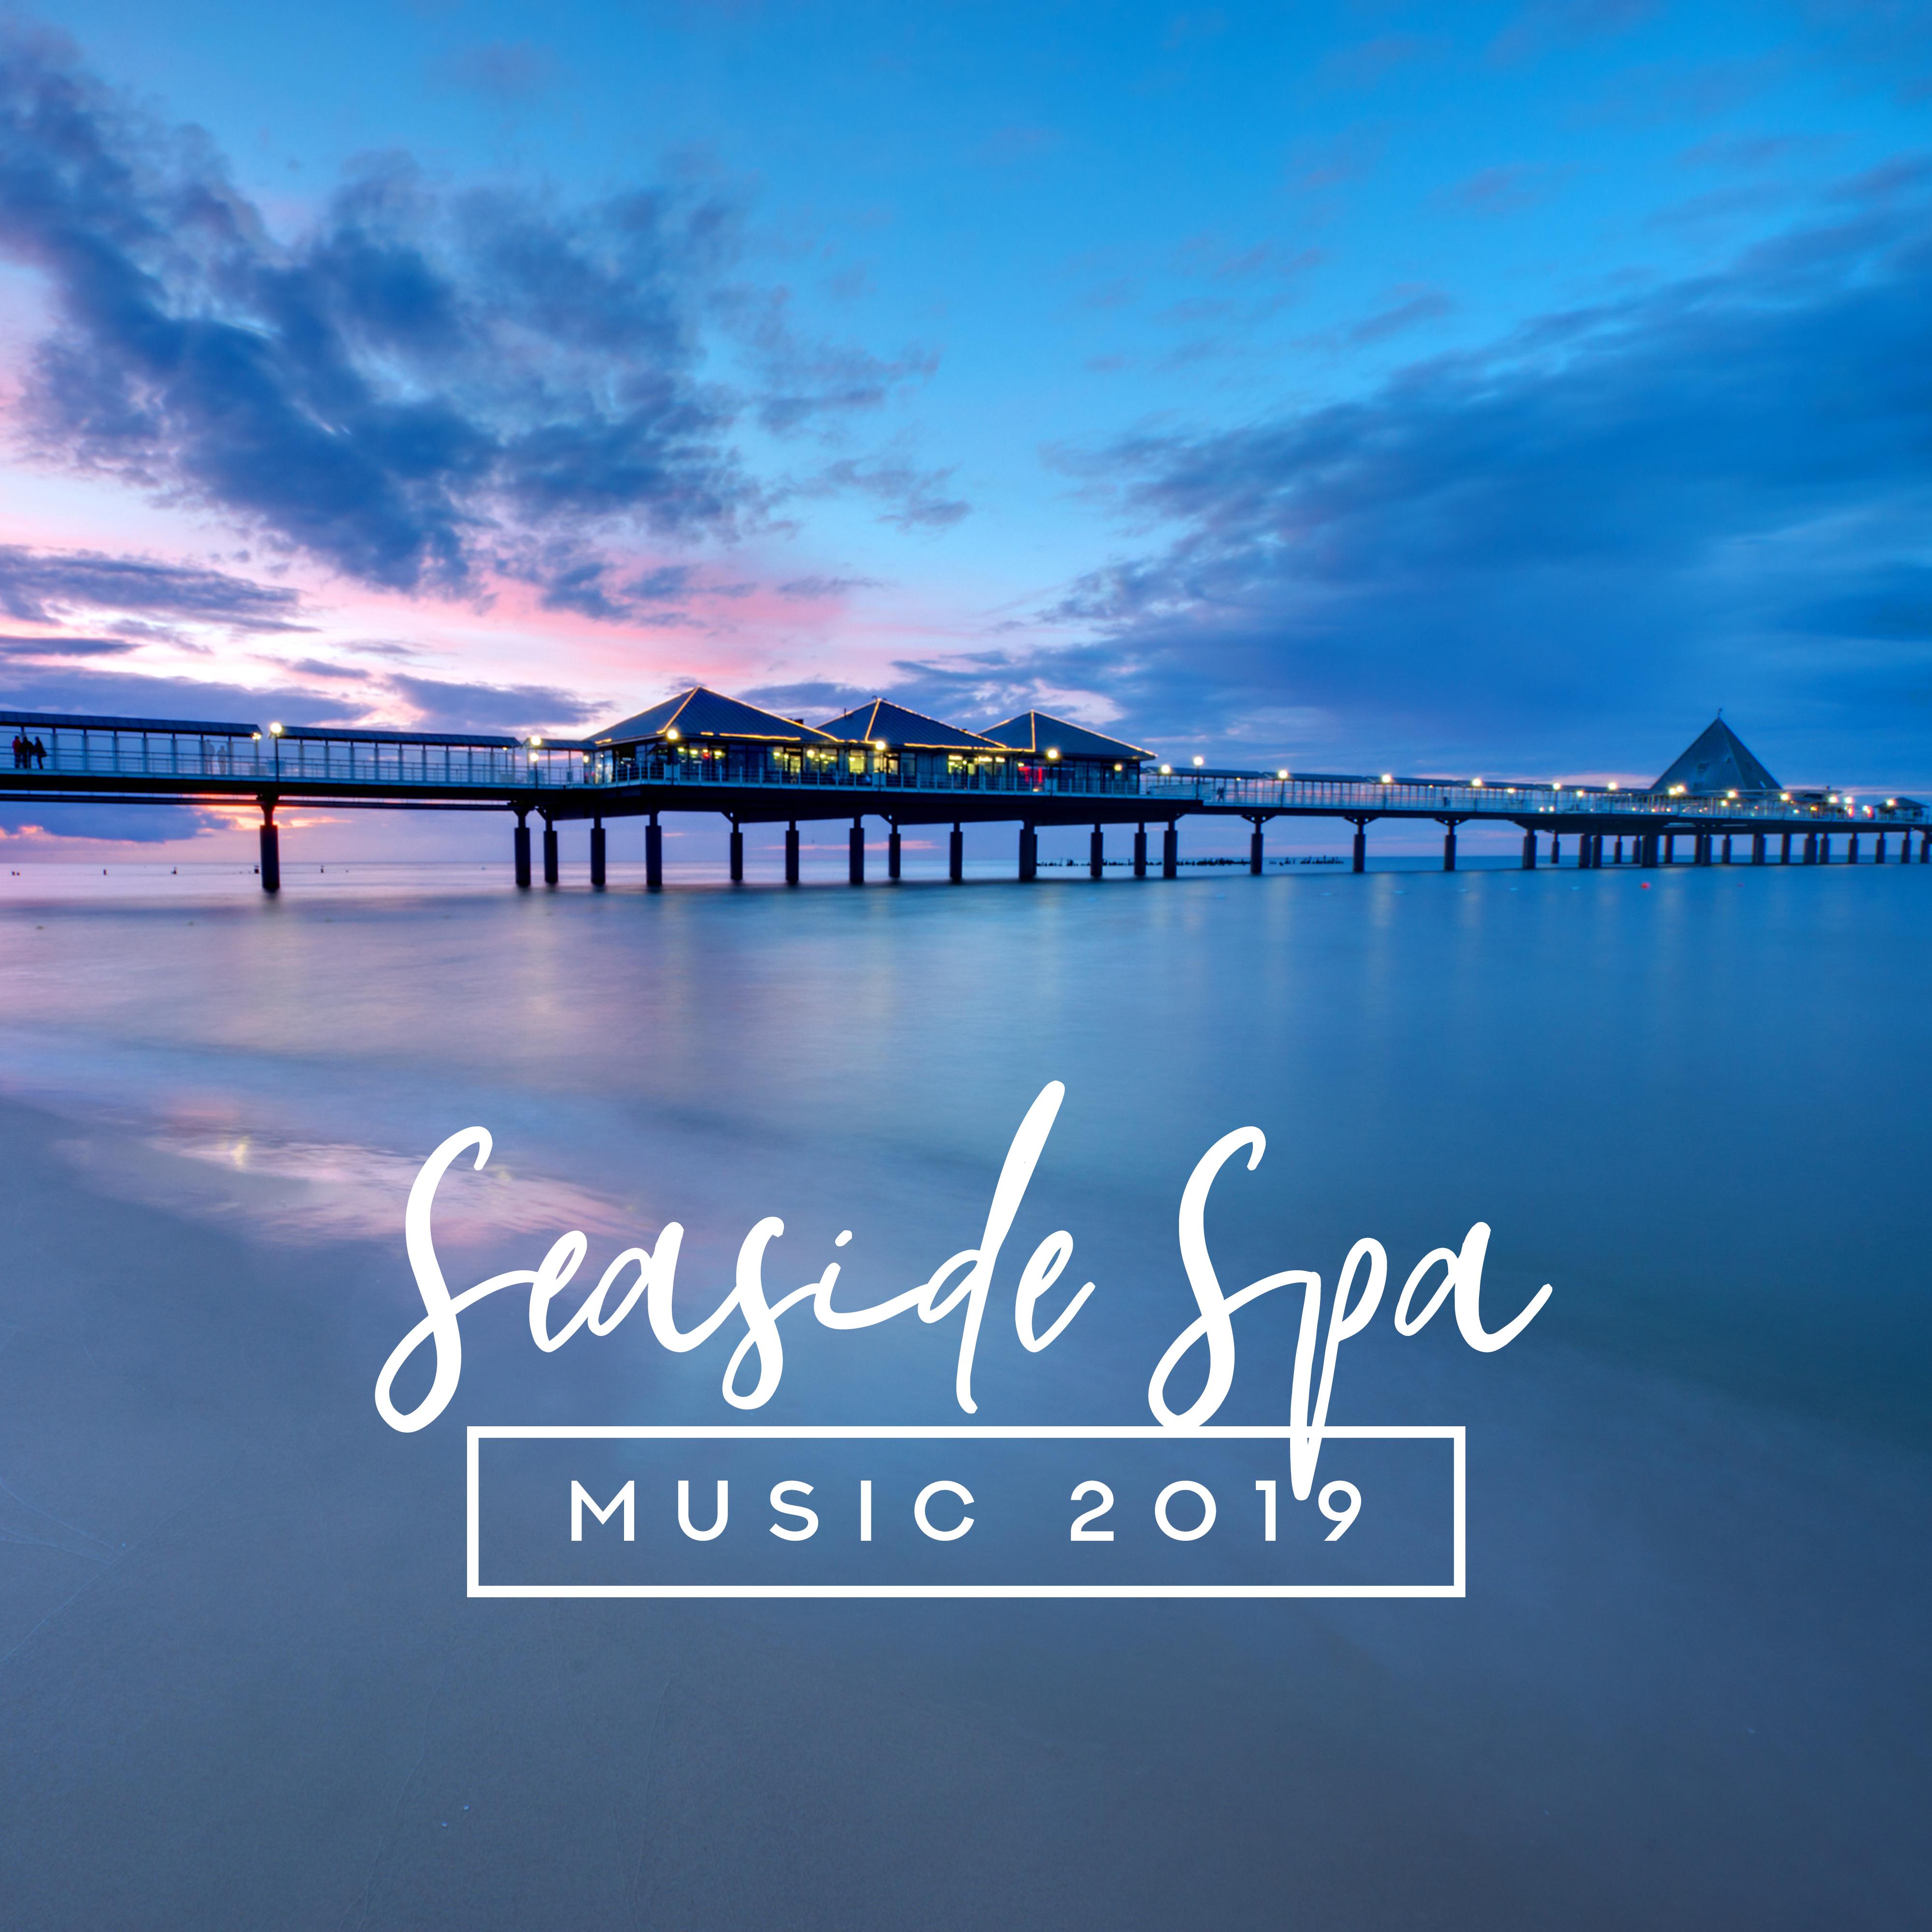 Seaside Spa Music 2019